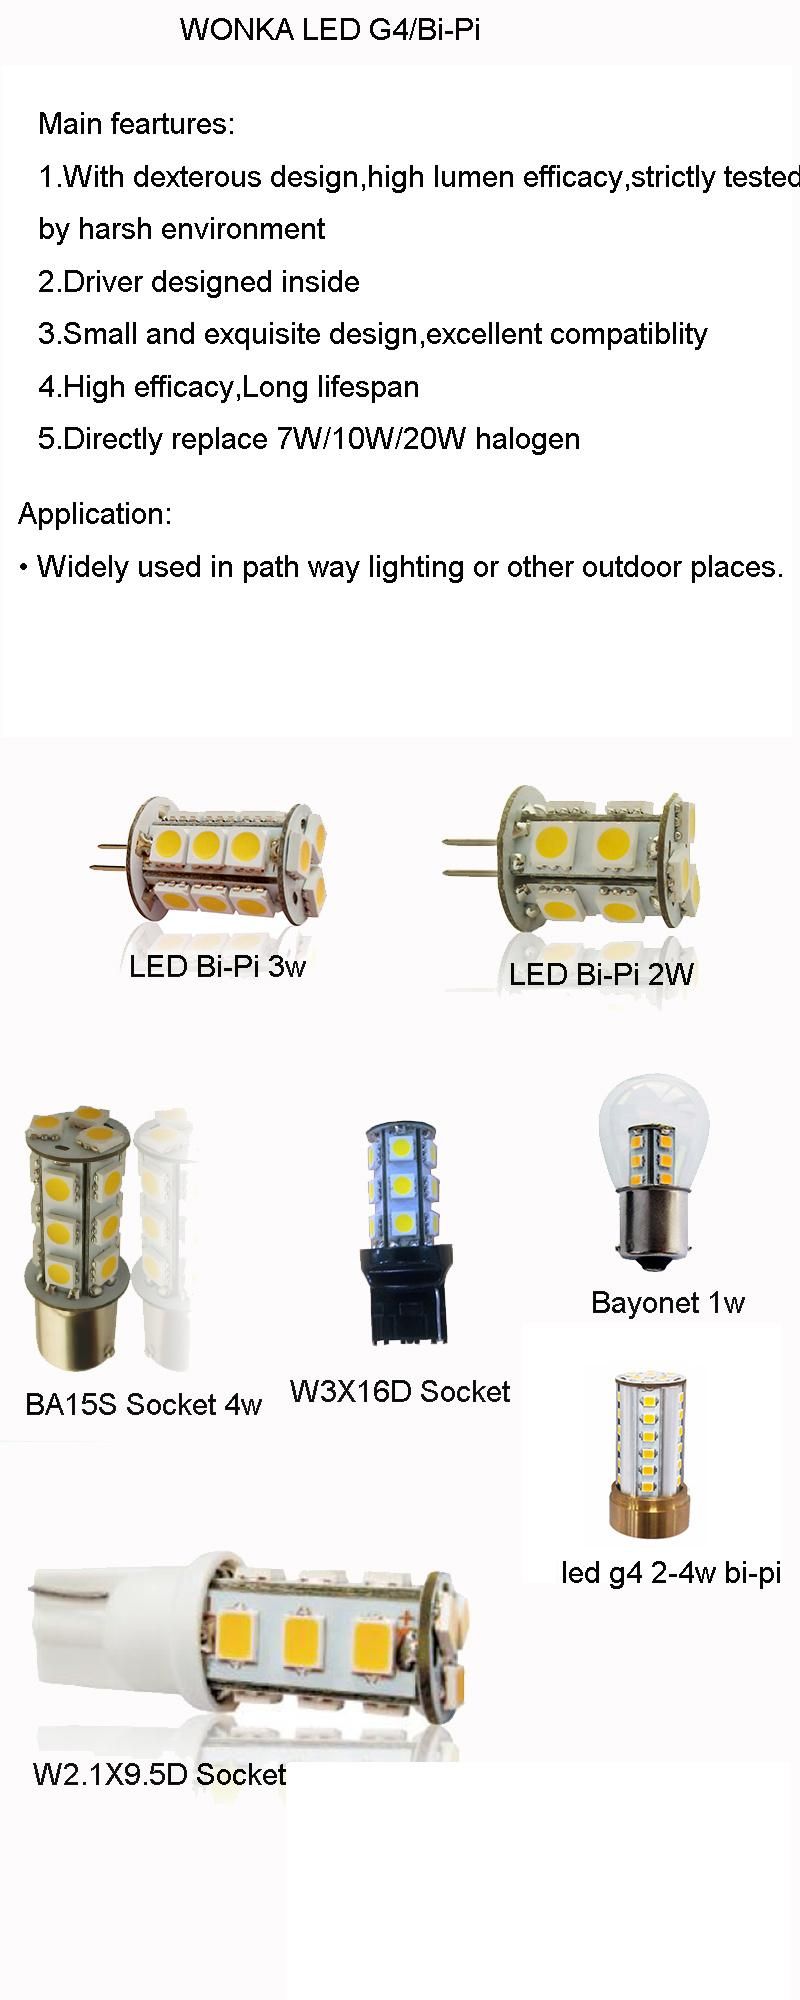 LED G4 Bi-Pin for Landscape Lighting 3W 12V AC/DC